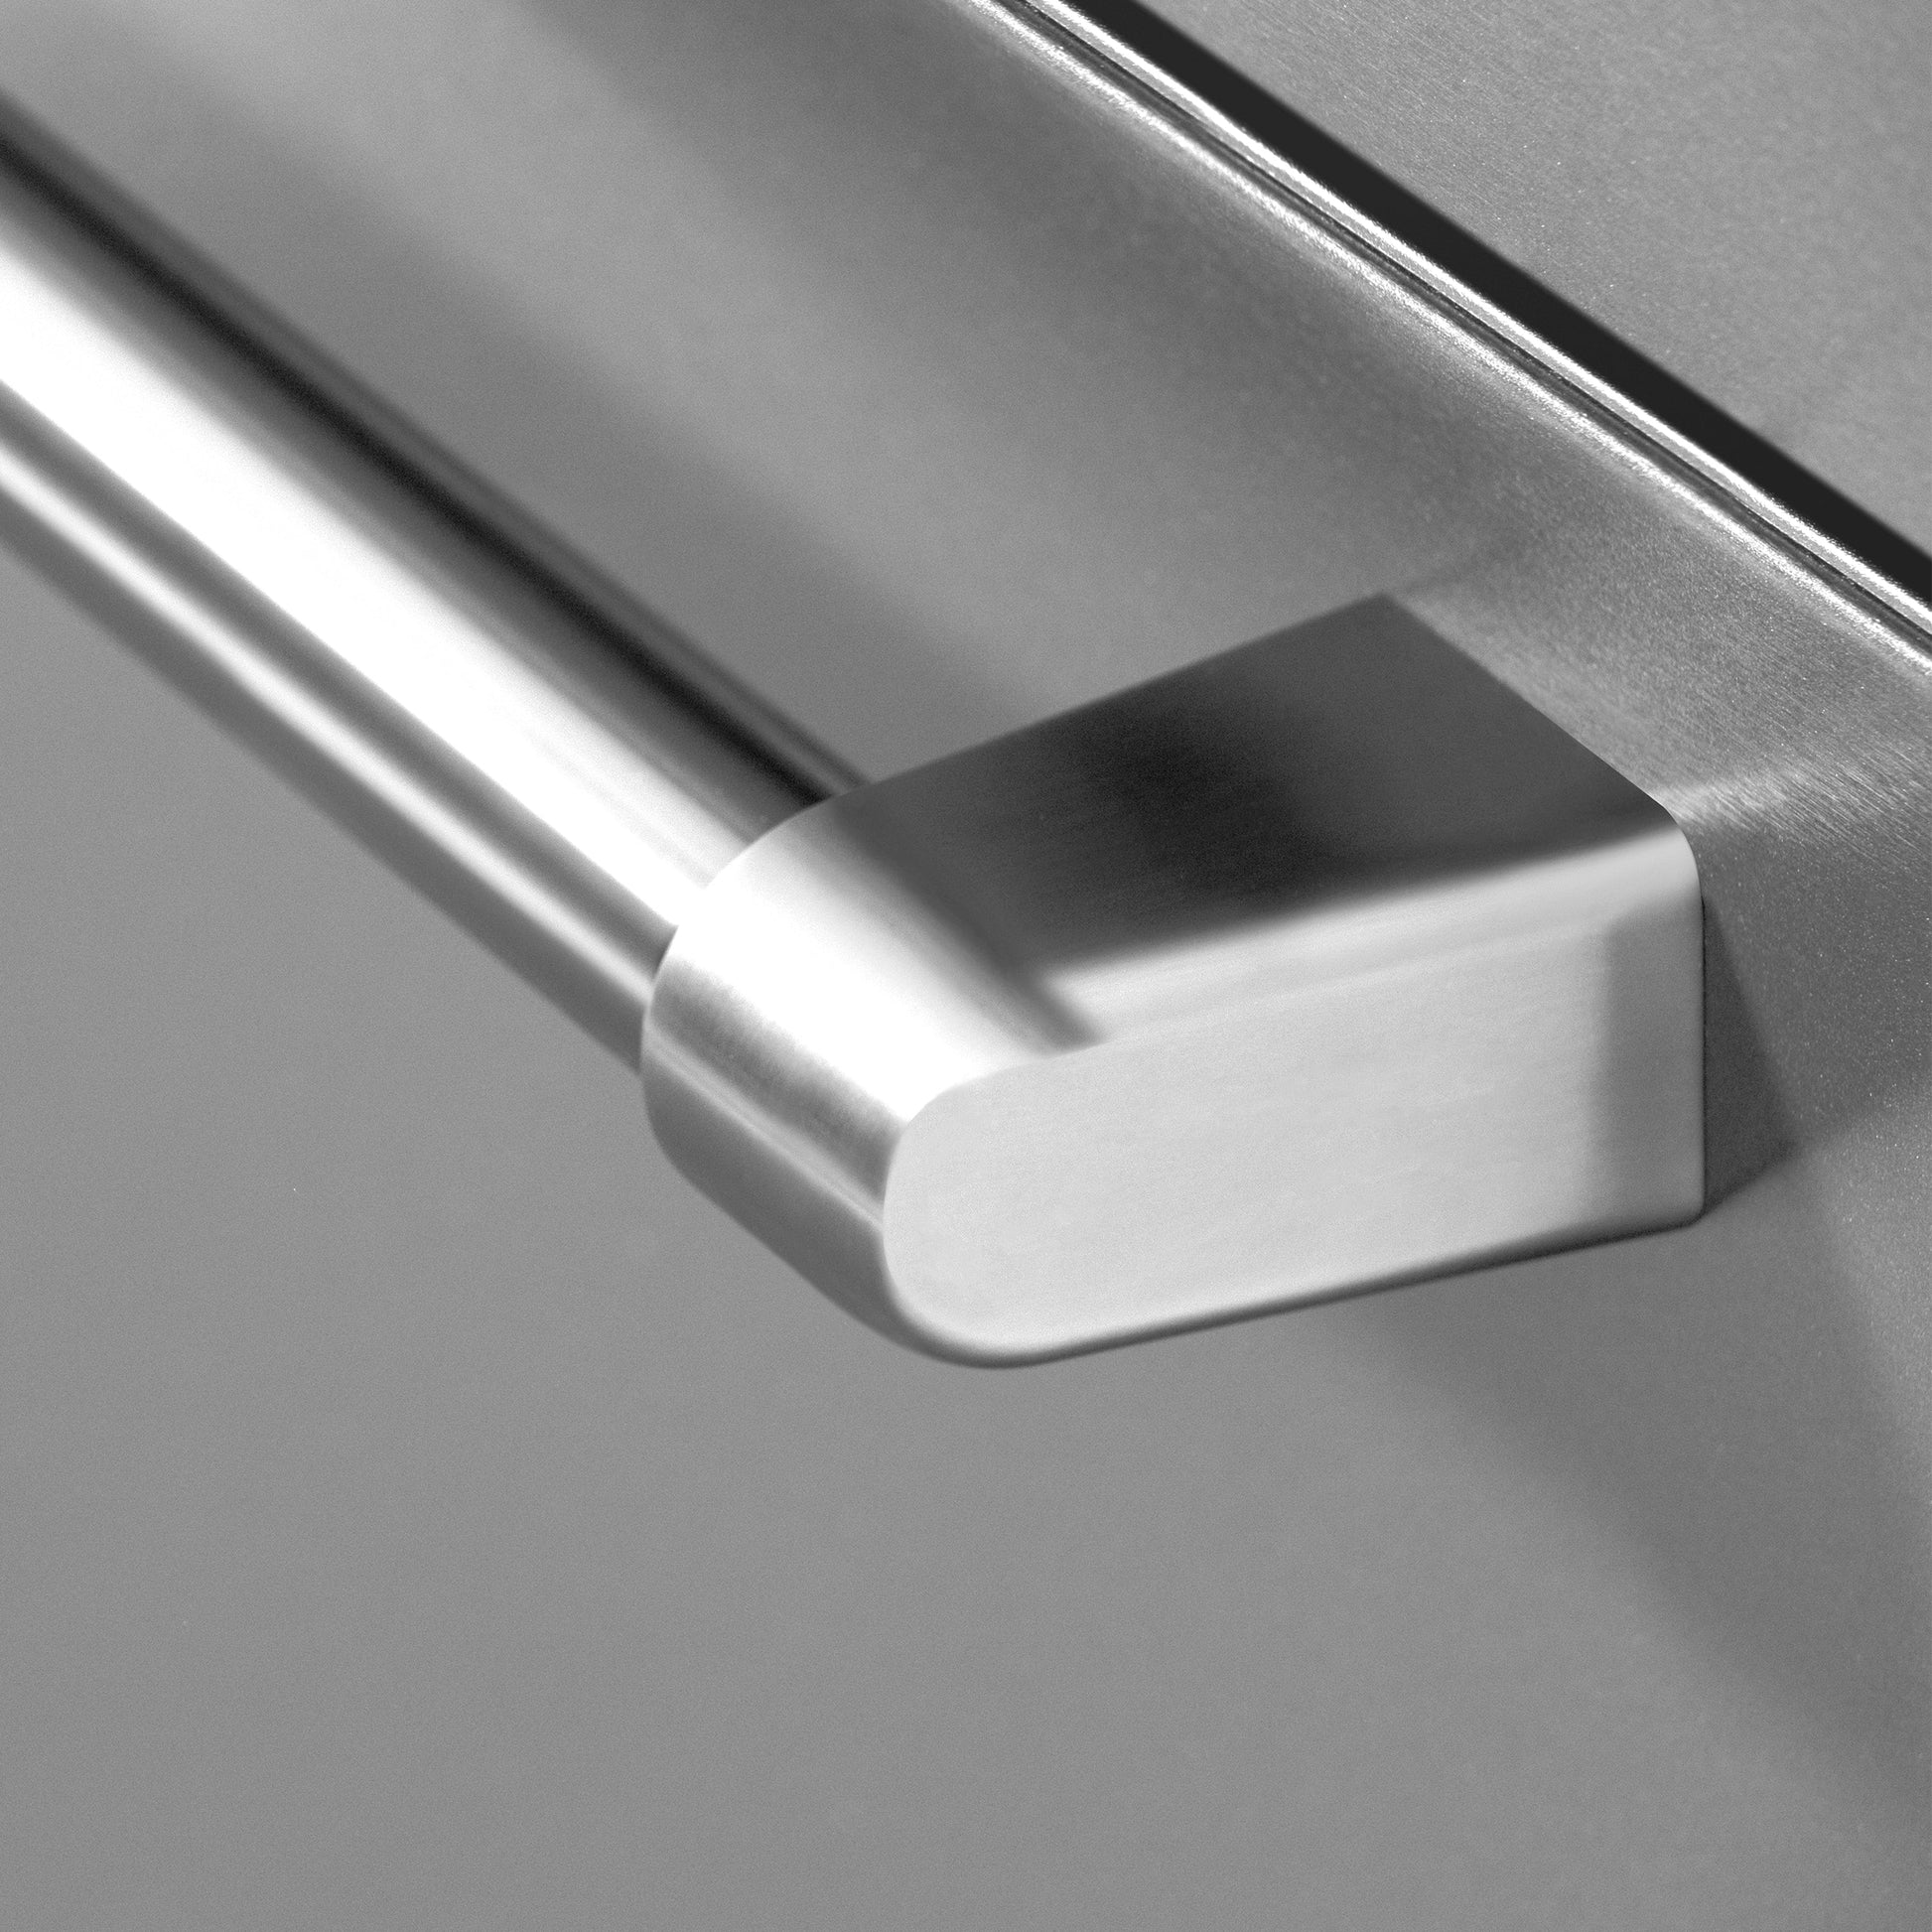 ZLINE 36" Freestanding French Door Refrigerator - Fingerprint Resistant with Water, Ice Dispenser, and Filter